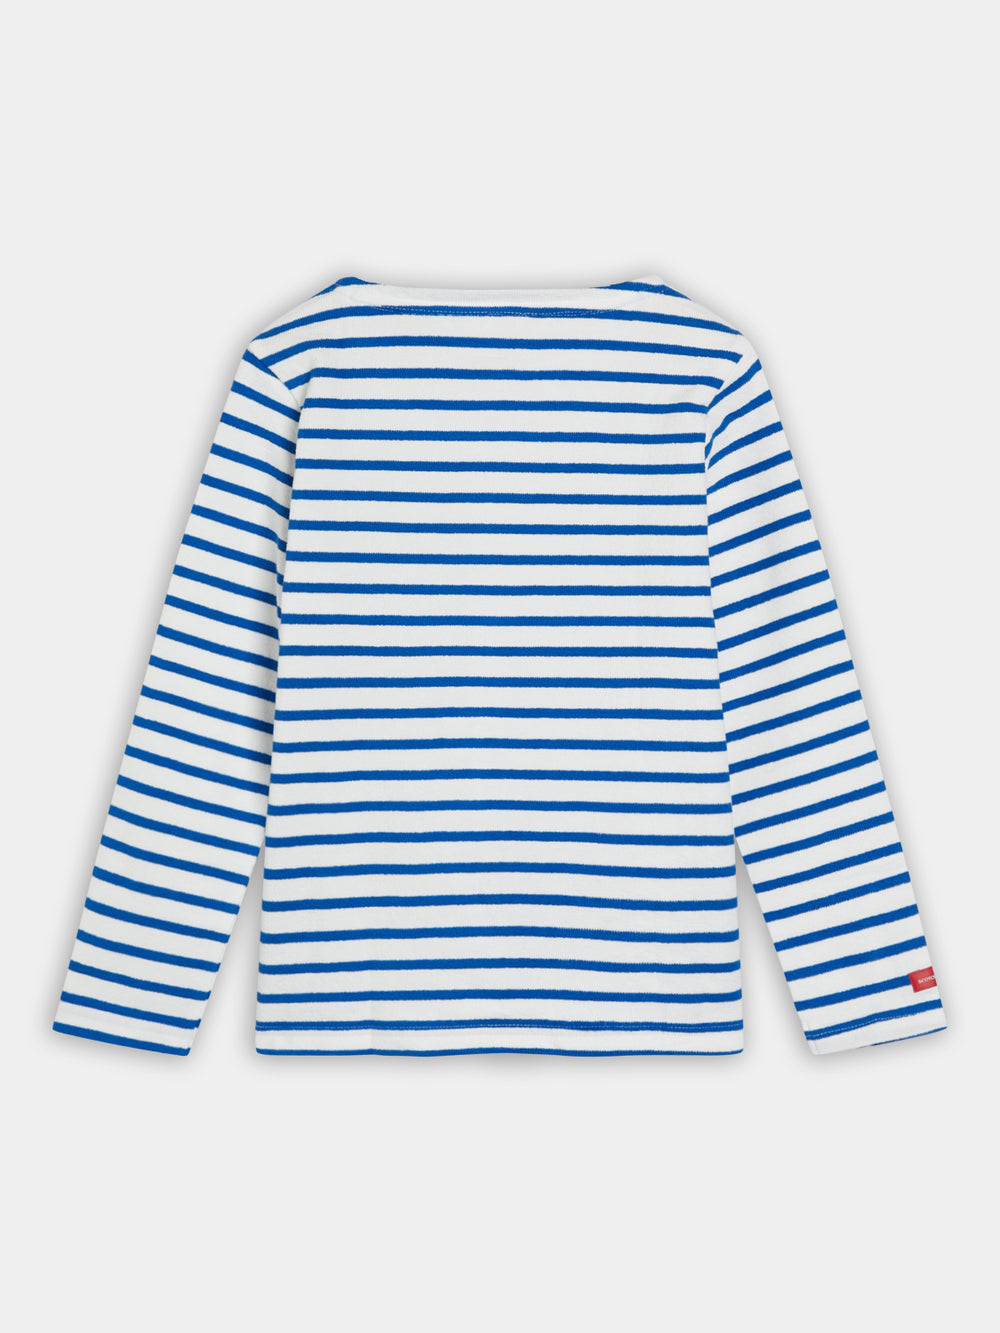 Kids - Long-sleeved striped t-shirt - Scotch & Soda AU